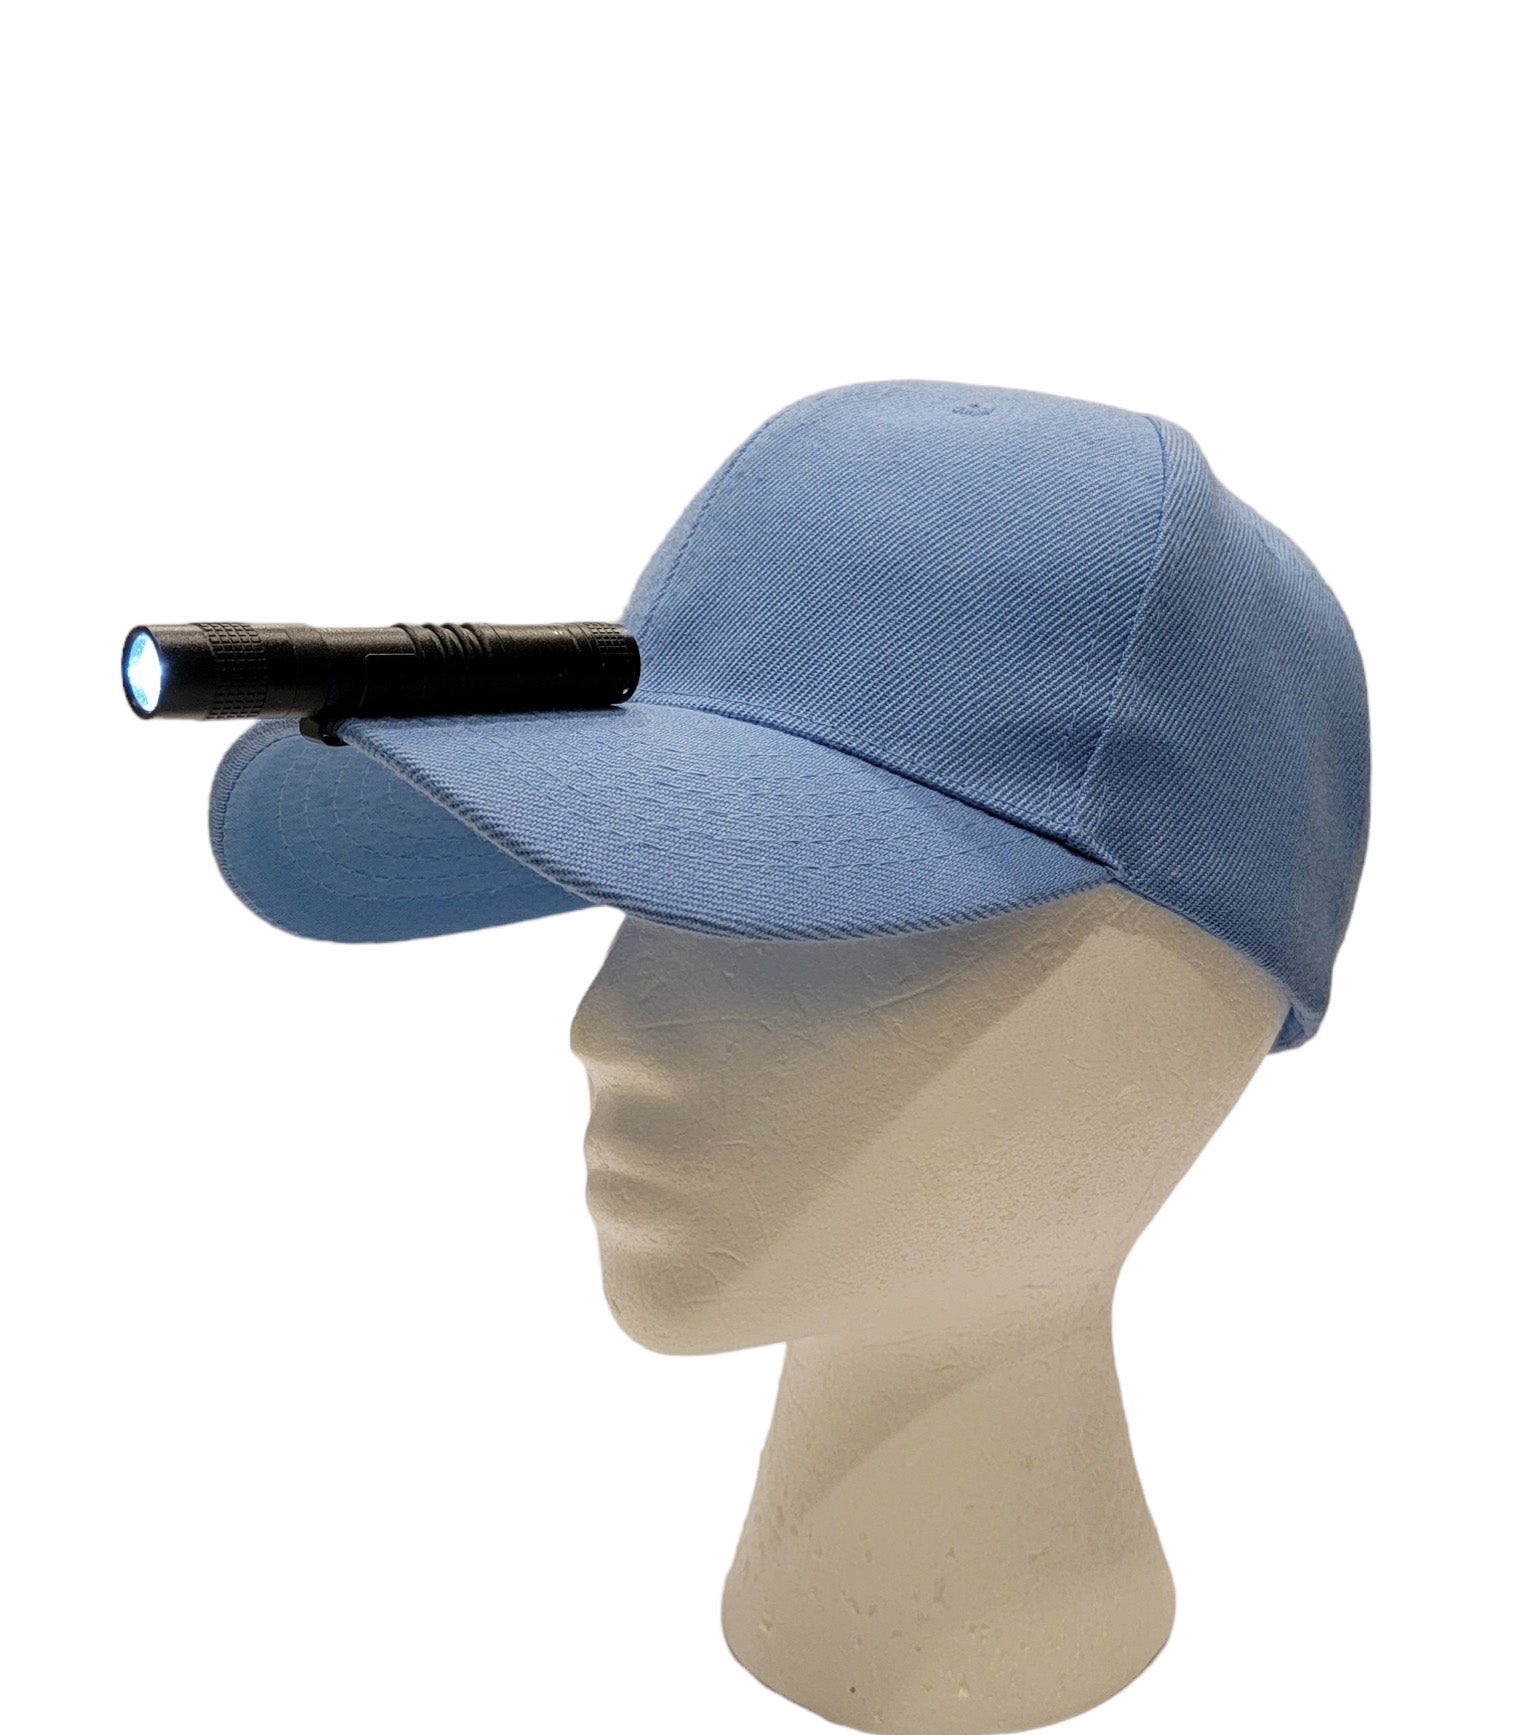 The Tatle Gear Flashlight On Hat